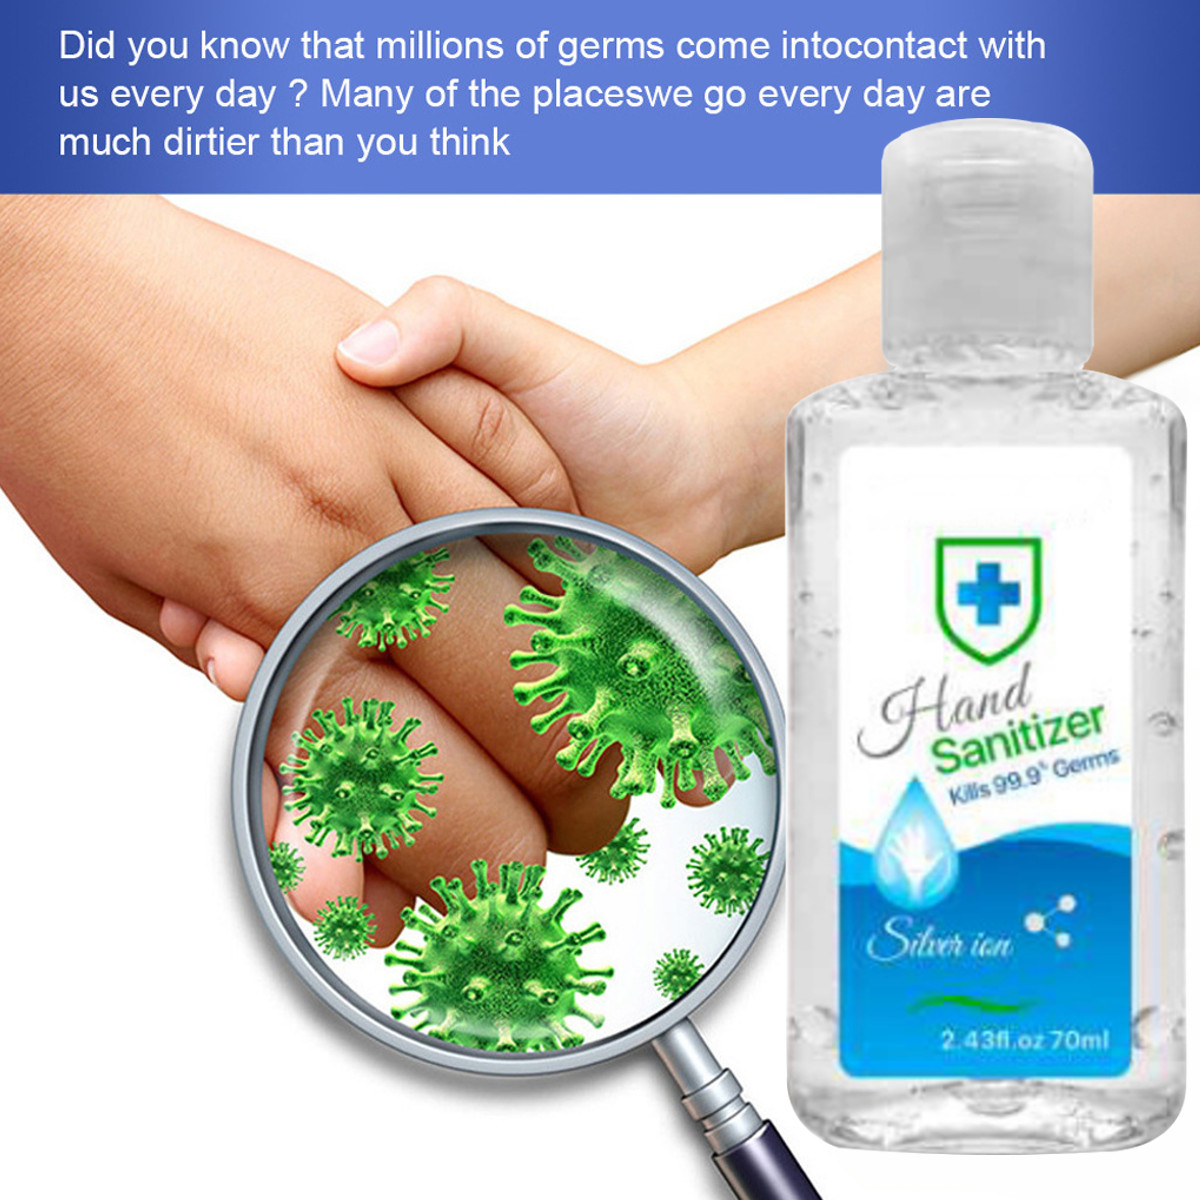 70ML-Rinse-free-Hand-Sanitizer-Gel-Hand-Cleanser-Antibacterial-Kills-999-Germs-Sanitizer-Hand-Soap-1655459-7